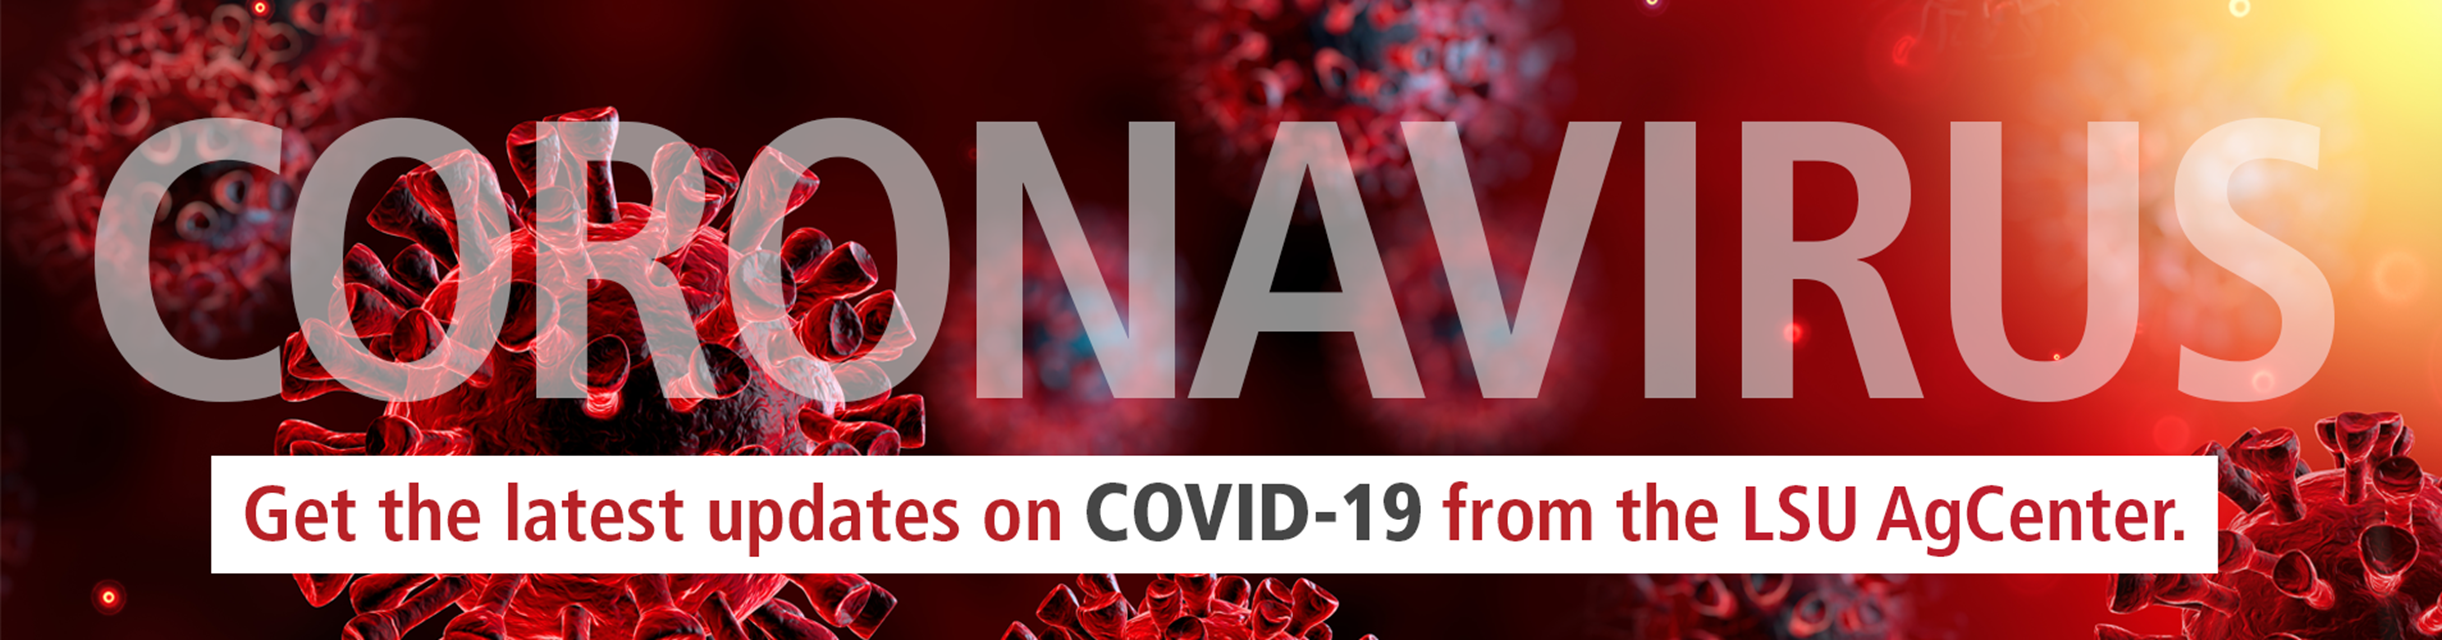 caronavirus web banner